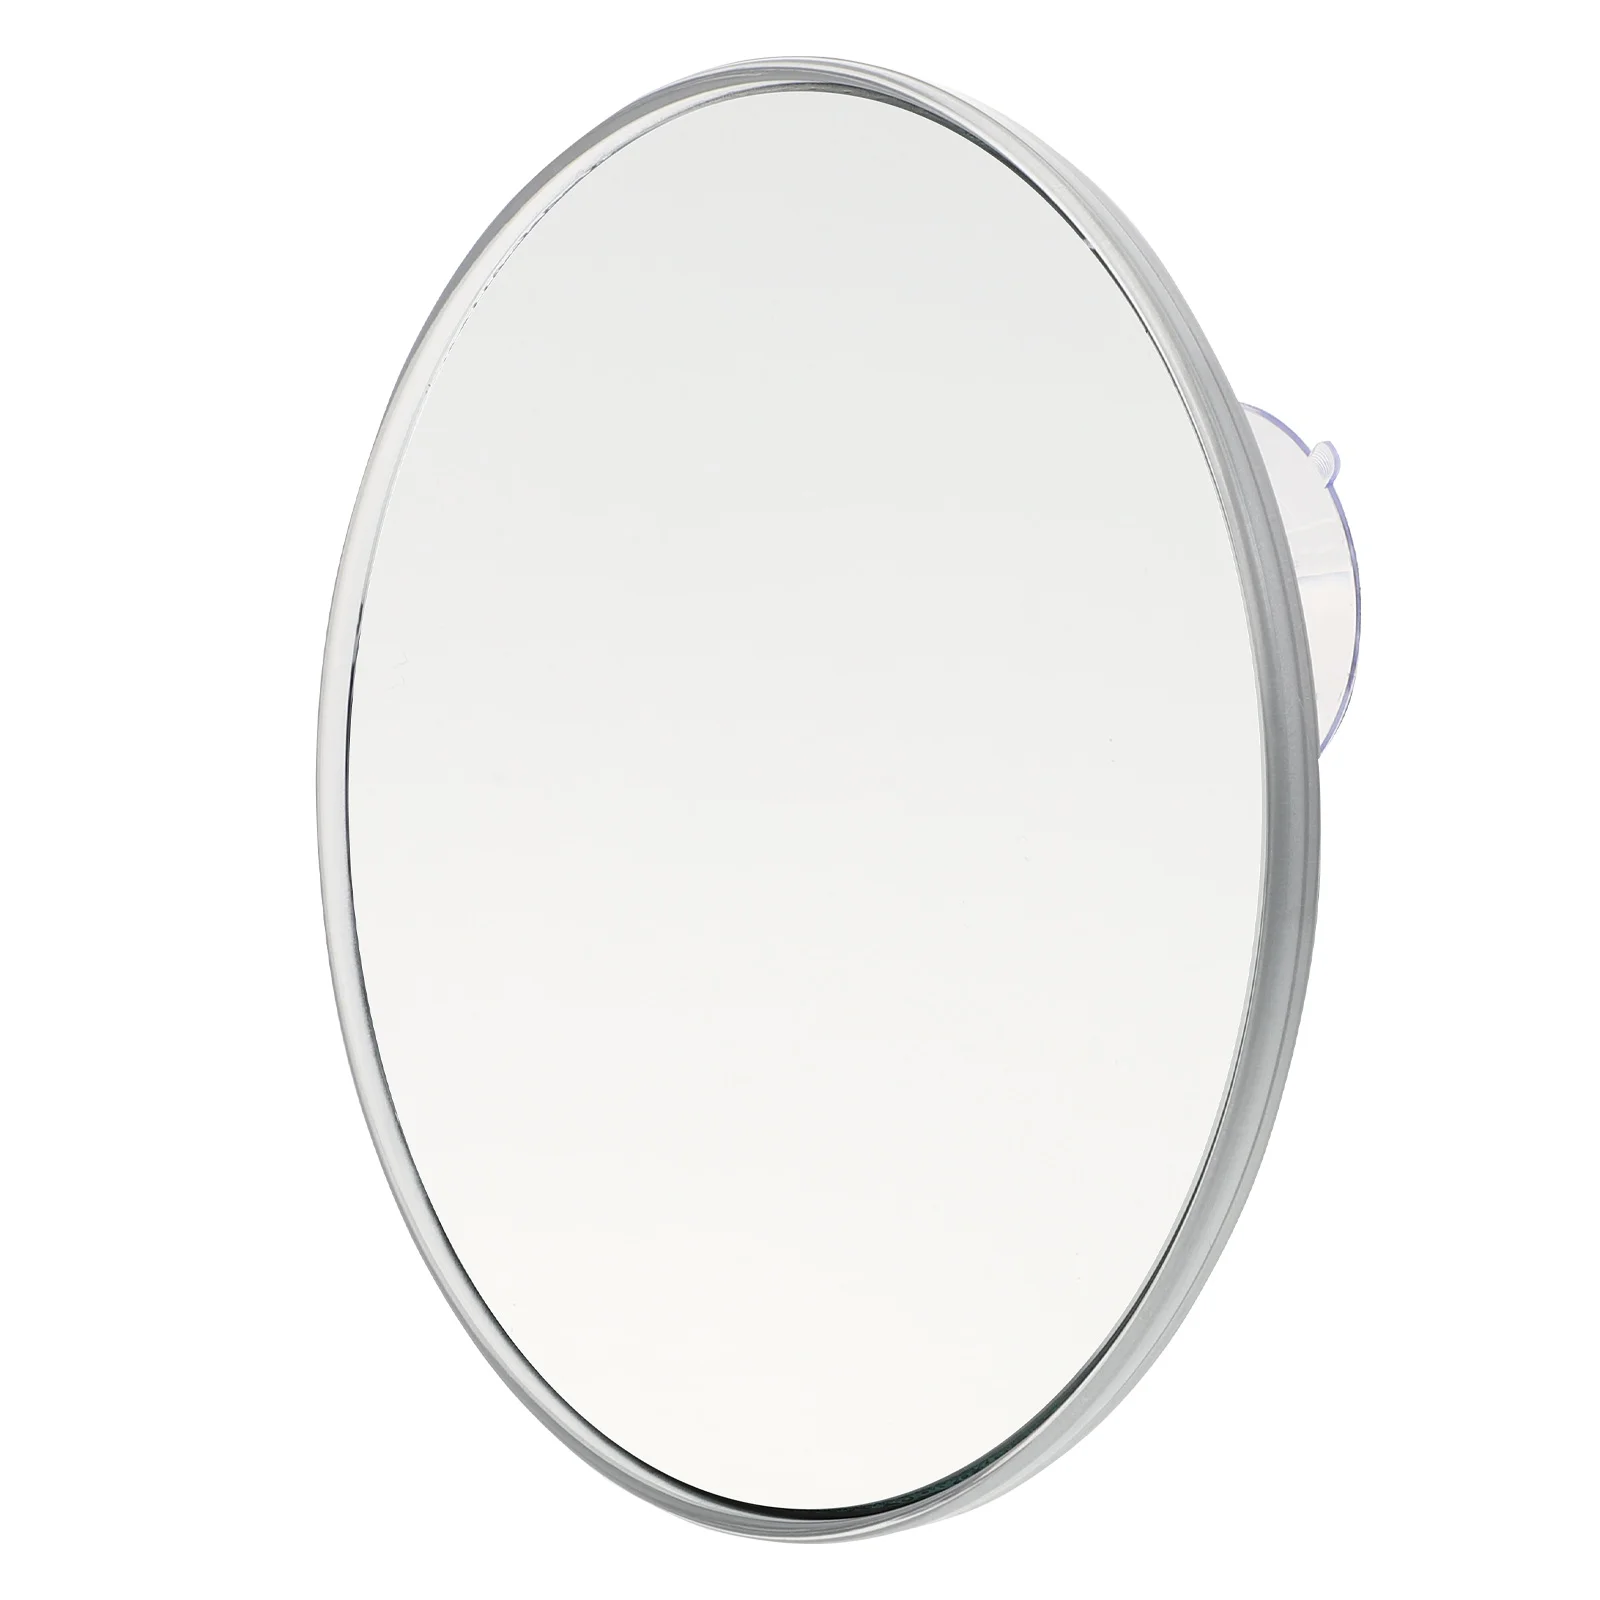 Metal Circle Wall Mirror Make Decorative Mirrors Magnifying Suction Mounted Makeup Cups Bathroom Vanity Hanging